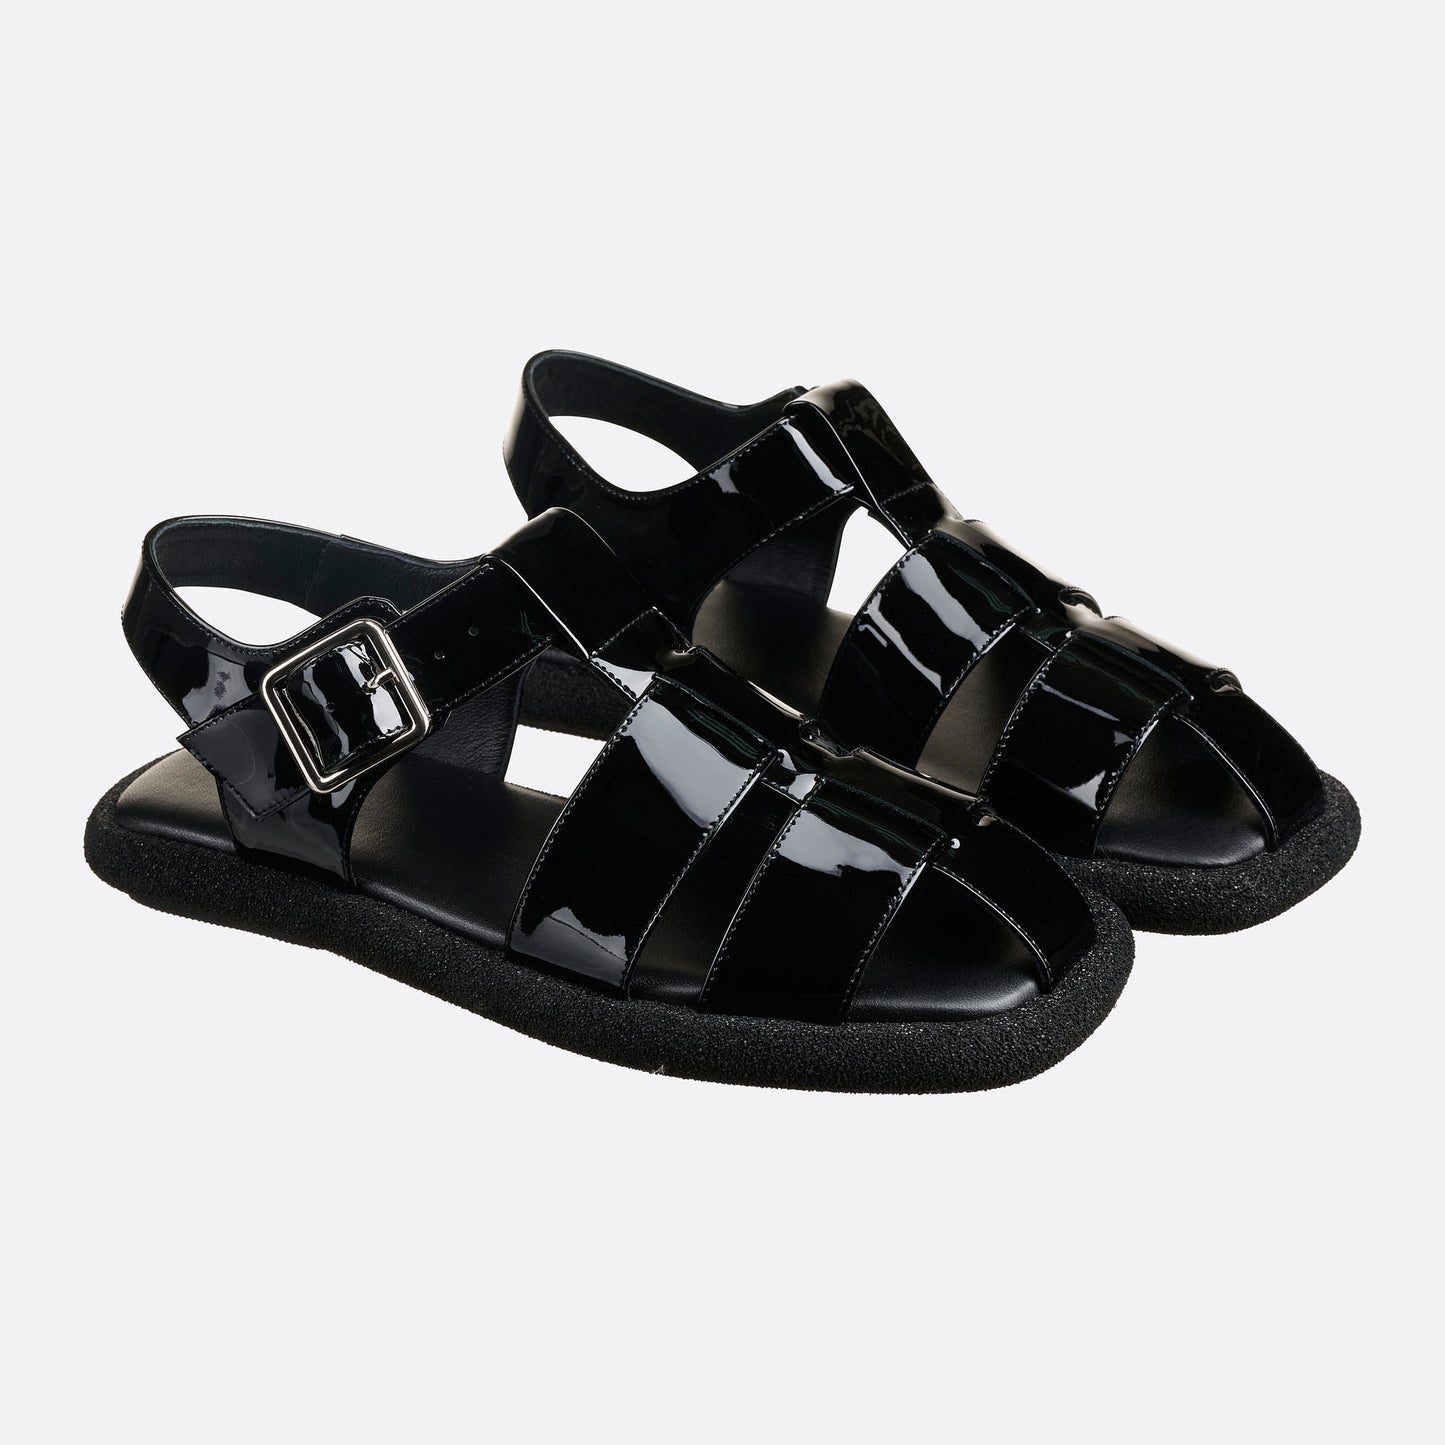 Obsidian Zenith Sandals